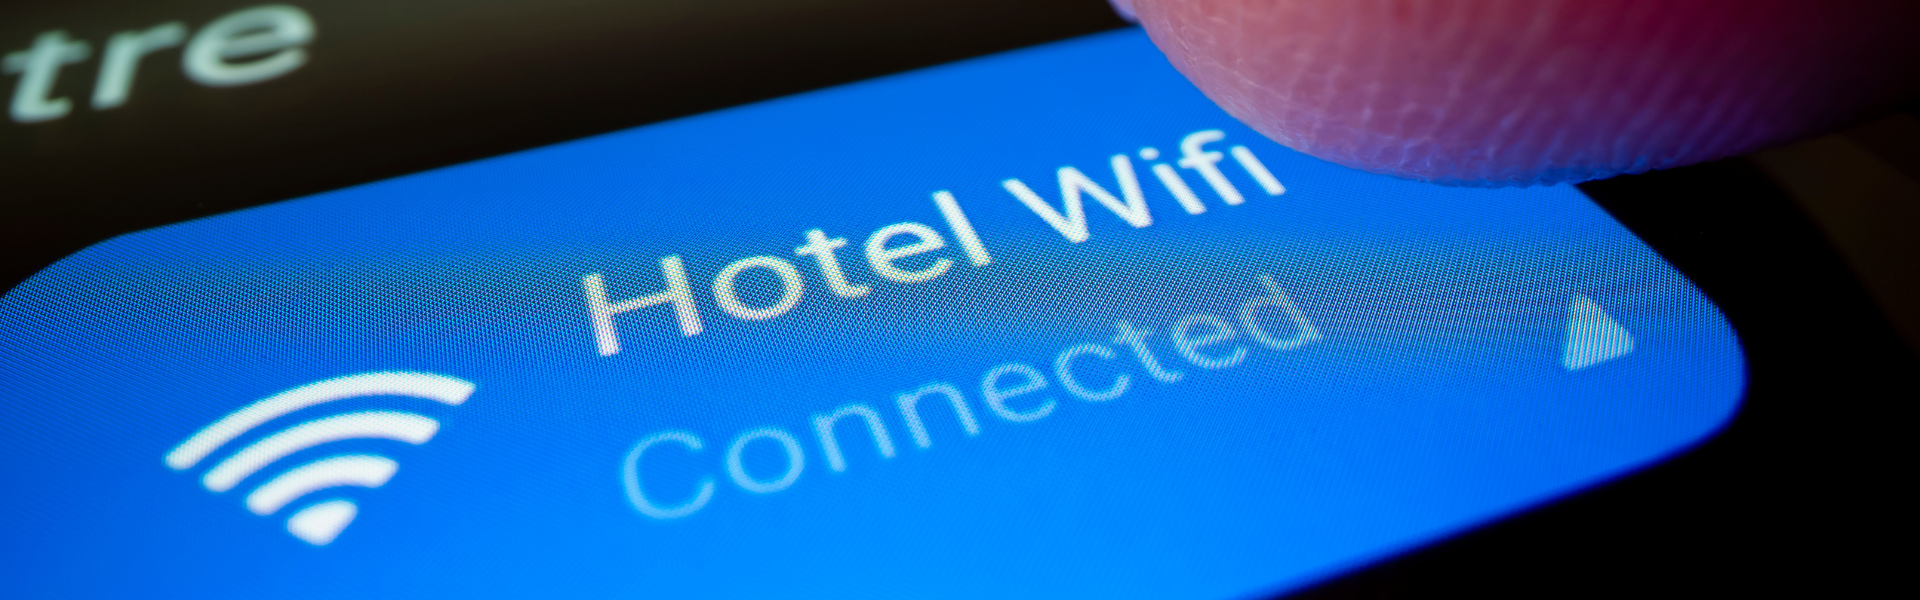 future of hotel wifi technology